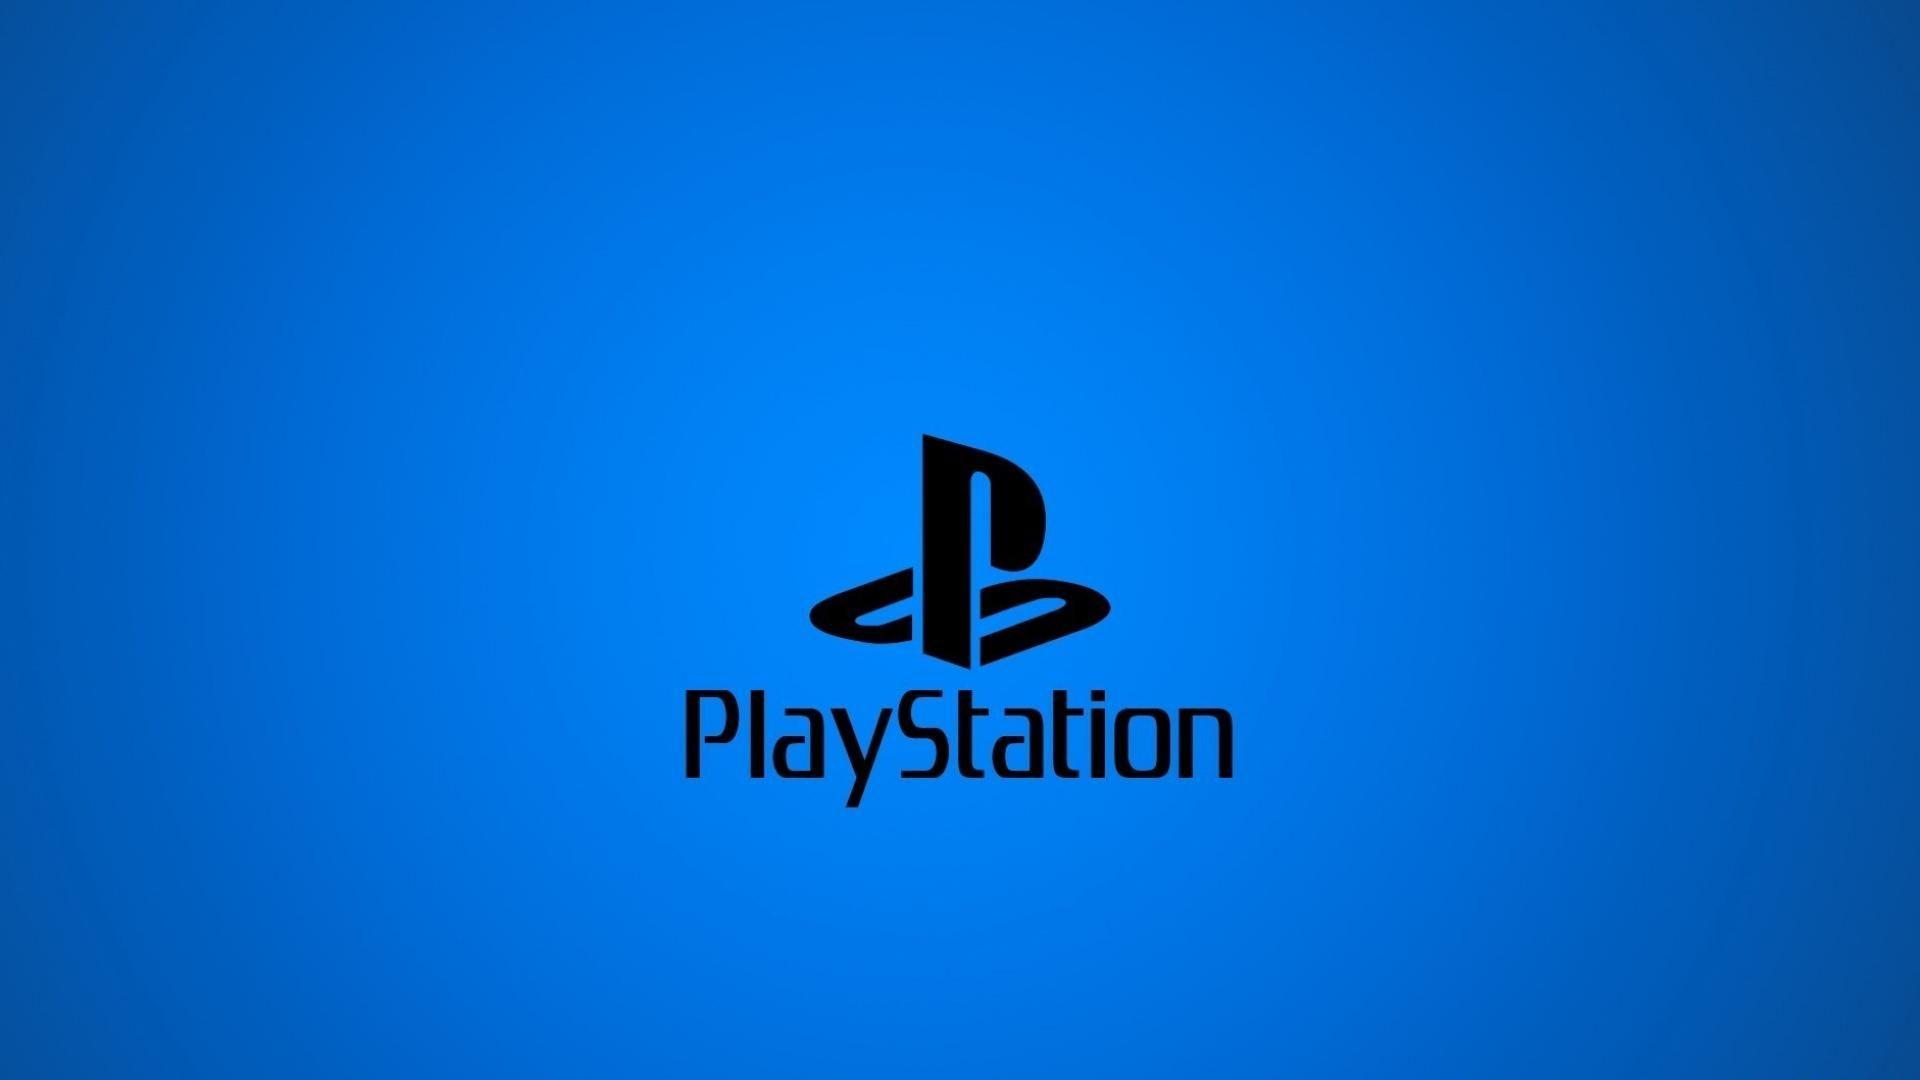 Sony playstation logos wallpapers.